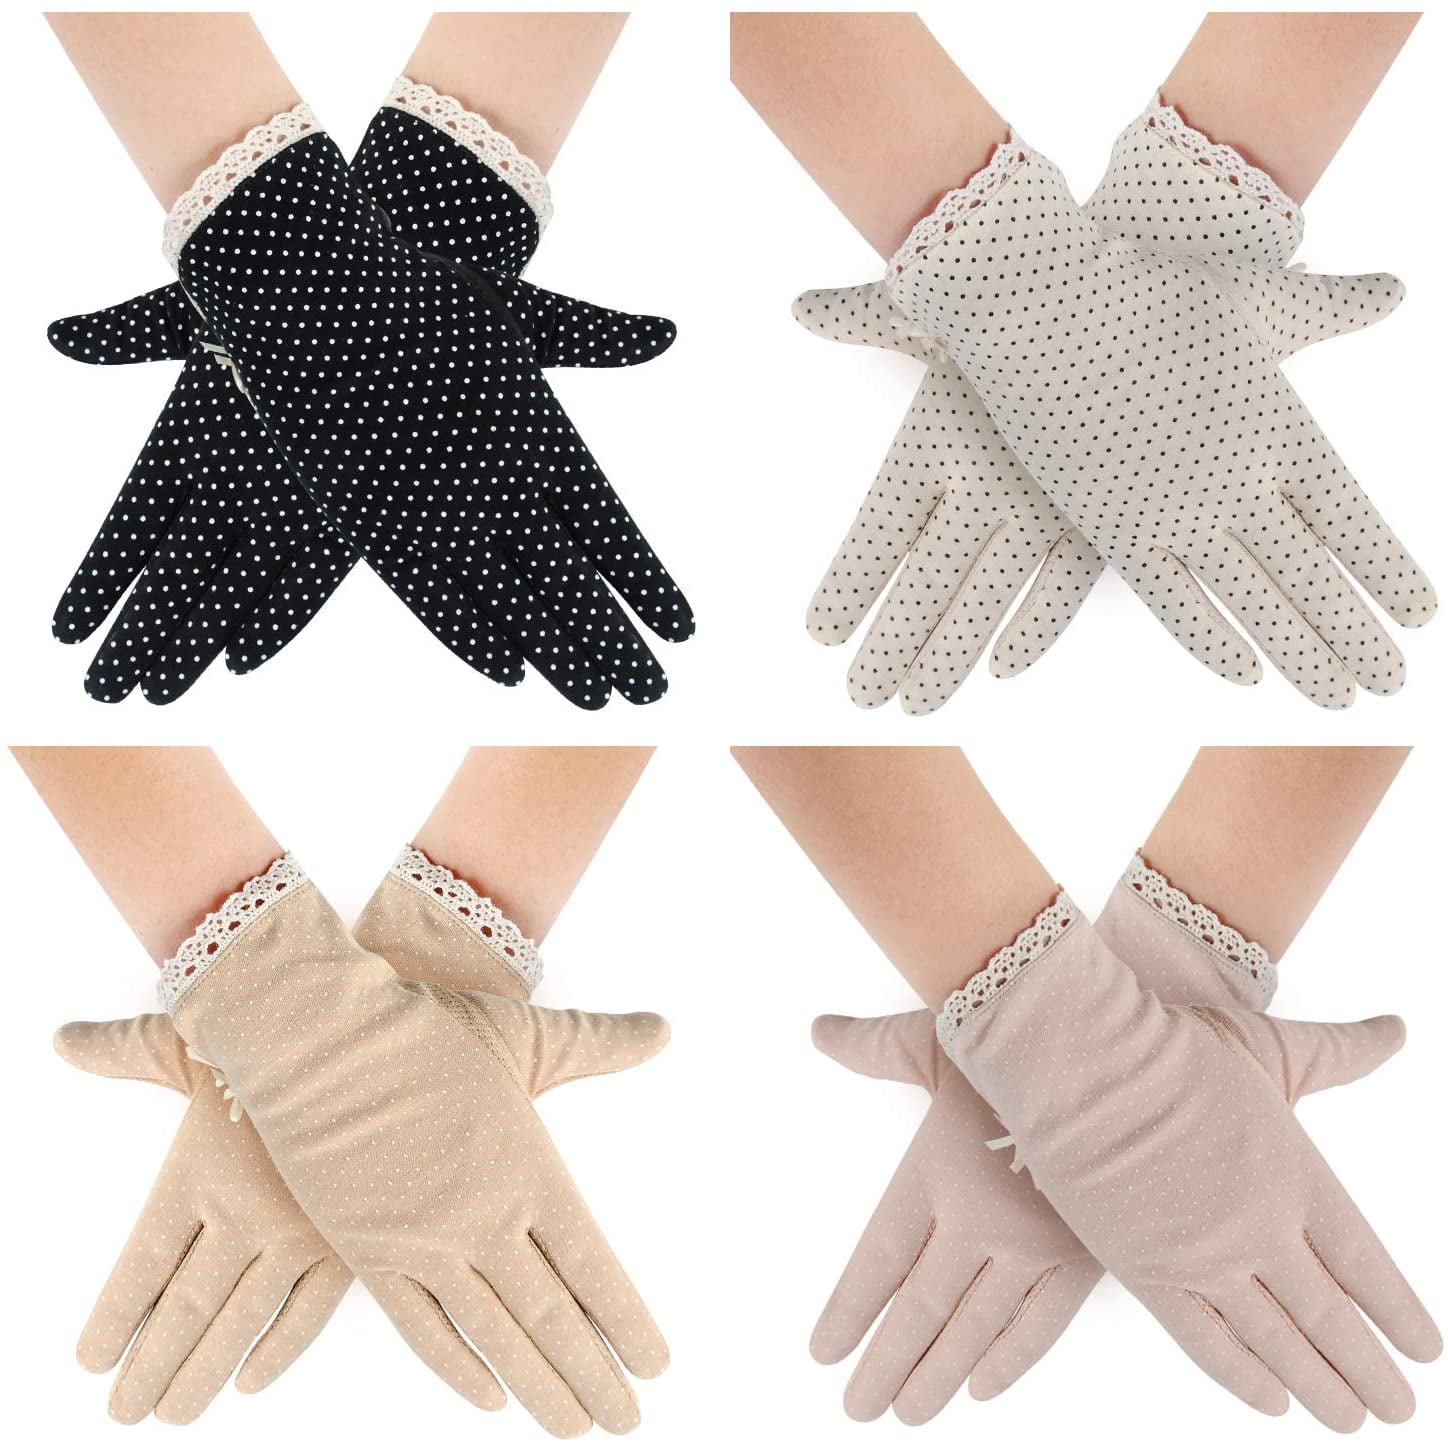 Mens Sport Gloves Polyester Quick-drying Non-slip Sunblock UV Protection Sunscreen Driving Gloves 